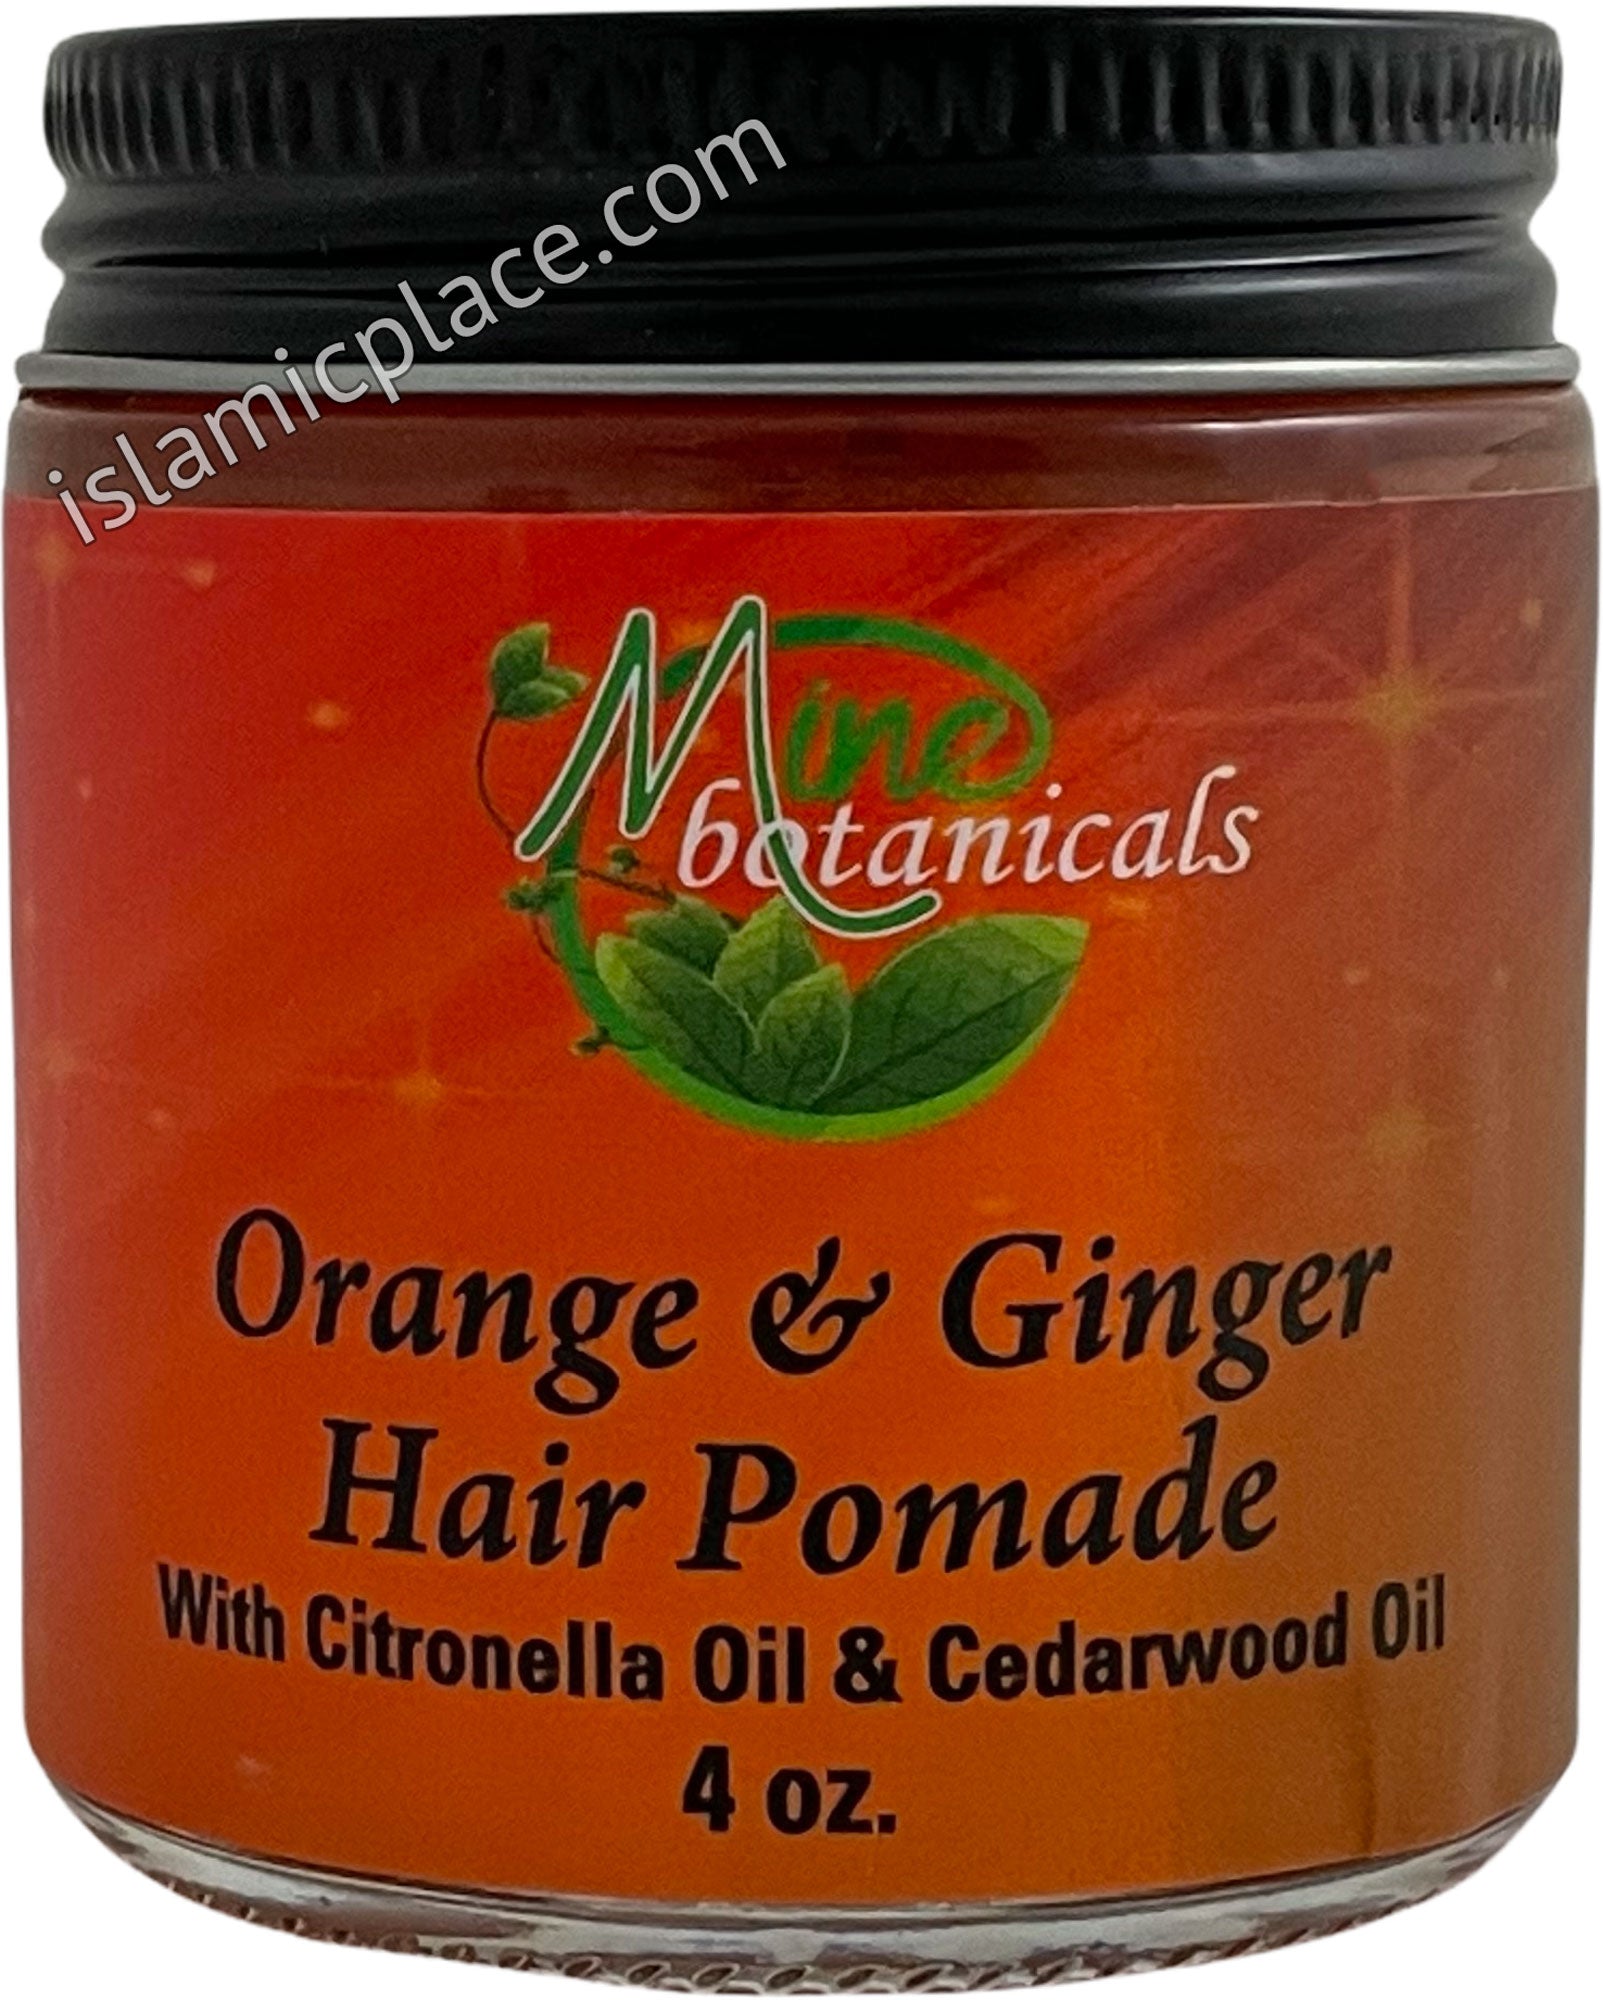 Orange & Ginger Hair Pomade with Citronella Oil & Cedarwood Oil